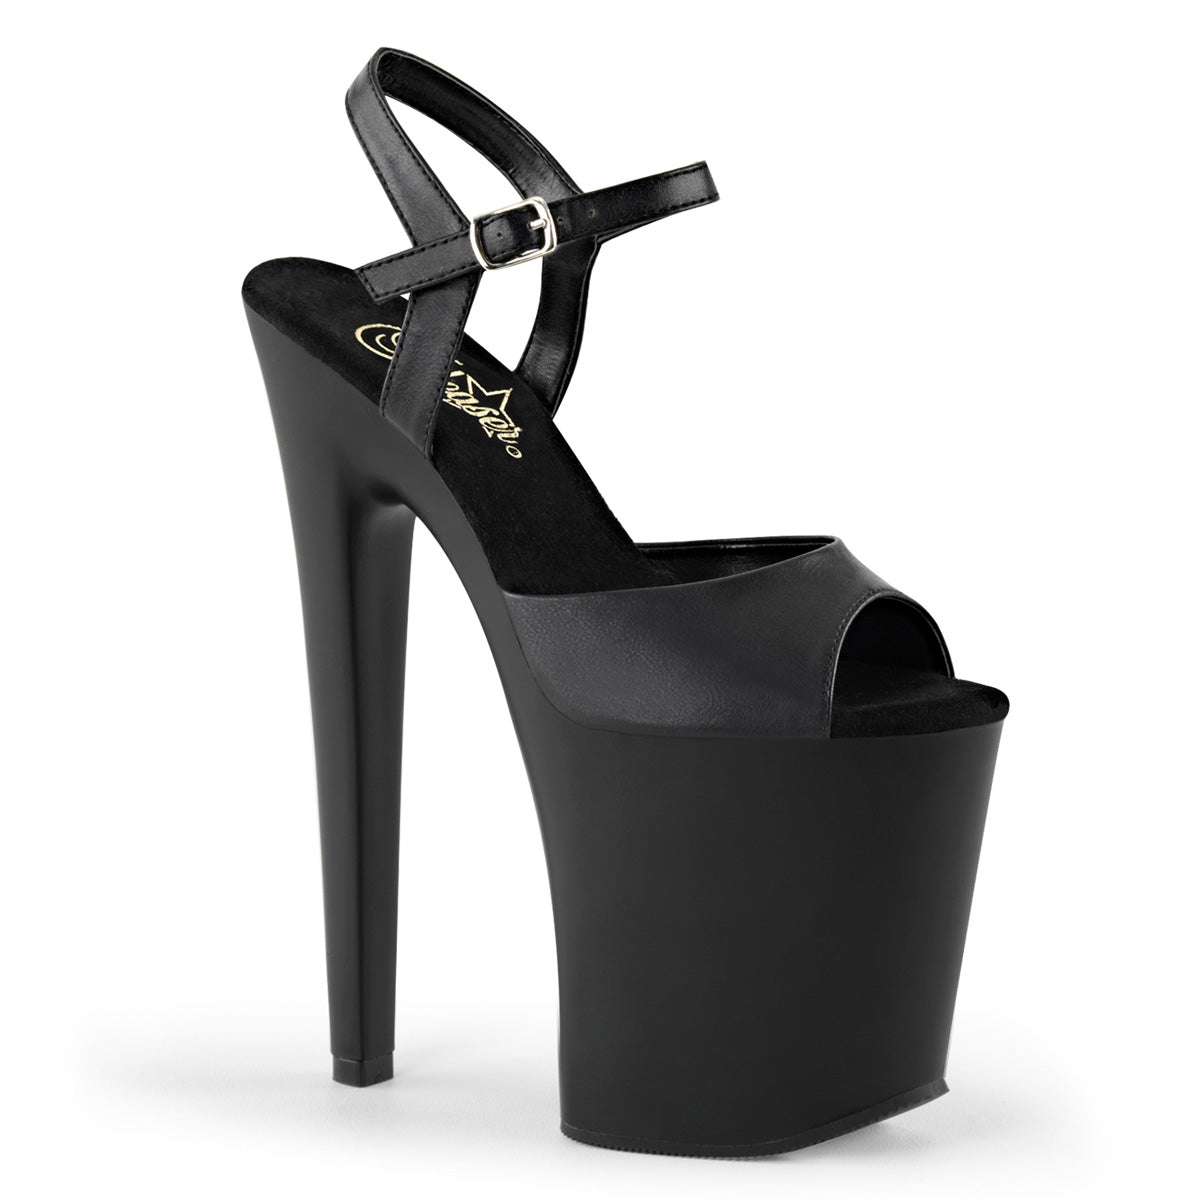 XTREME-809 Pleaser 8" Heel Black Pole Dancing Platform Shoes-Pleaser- Sexy Shoes